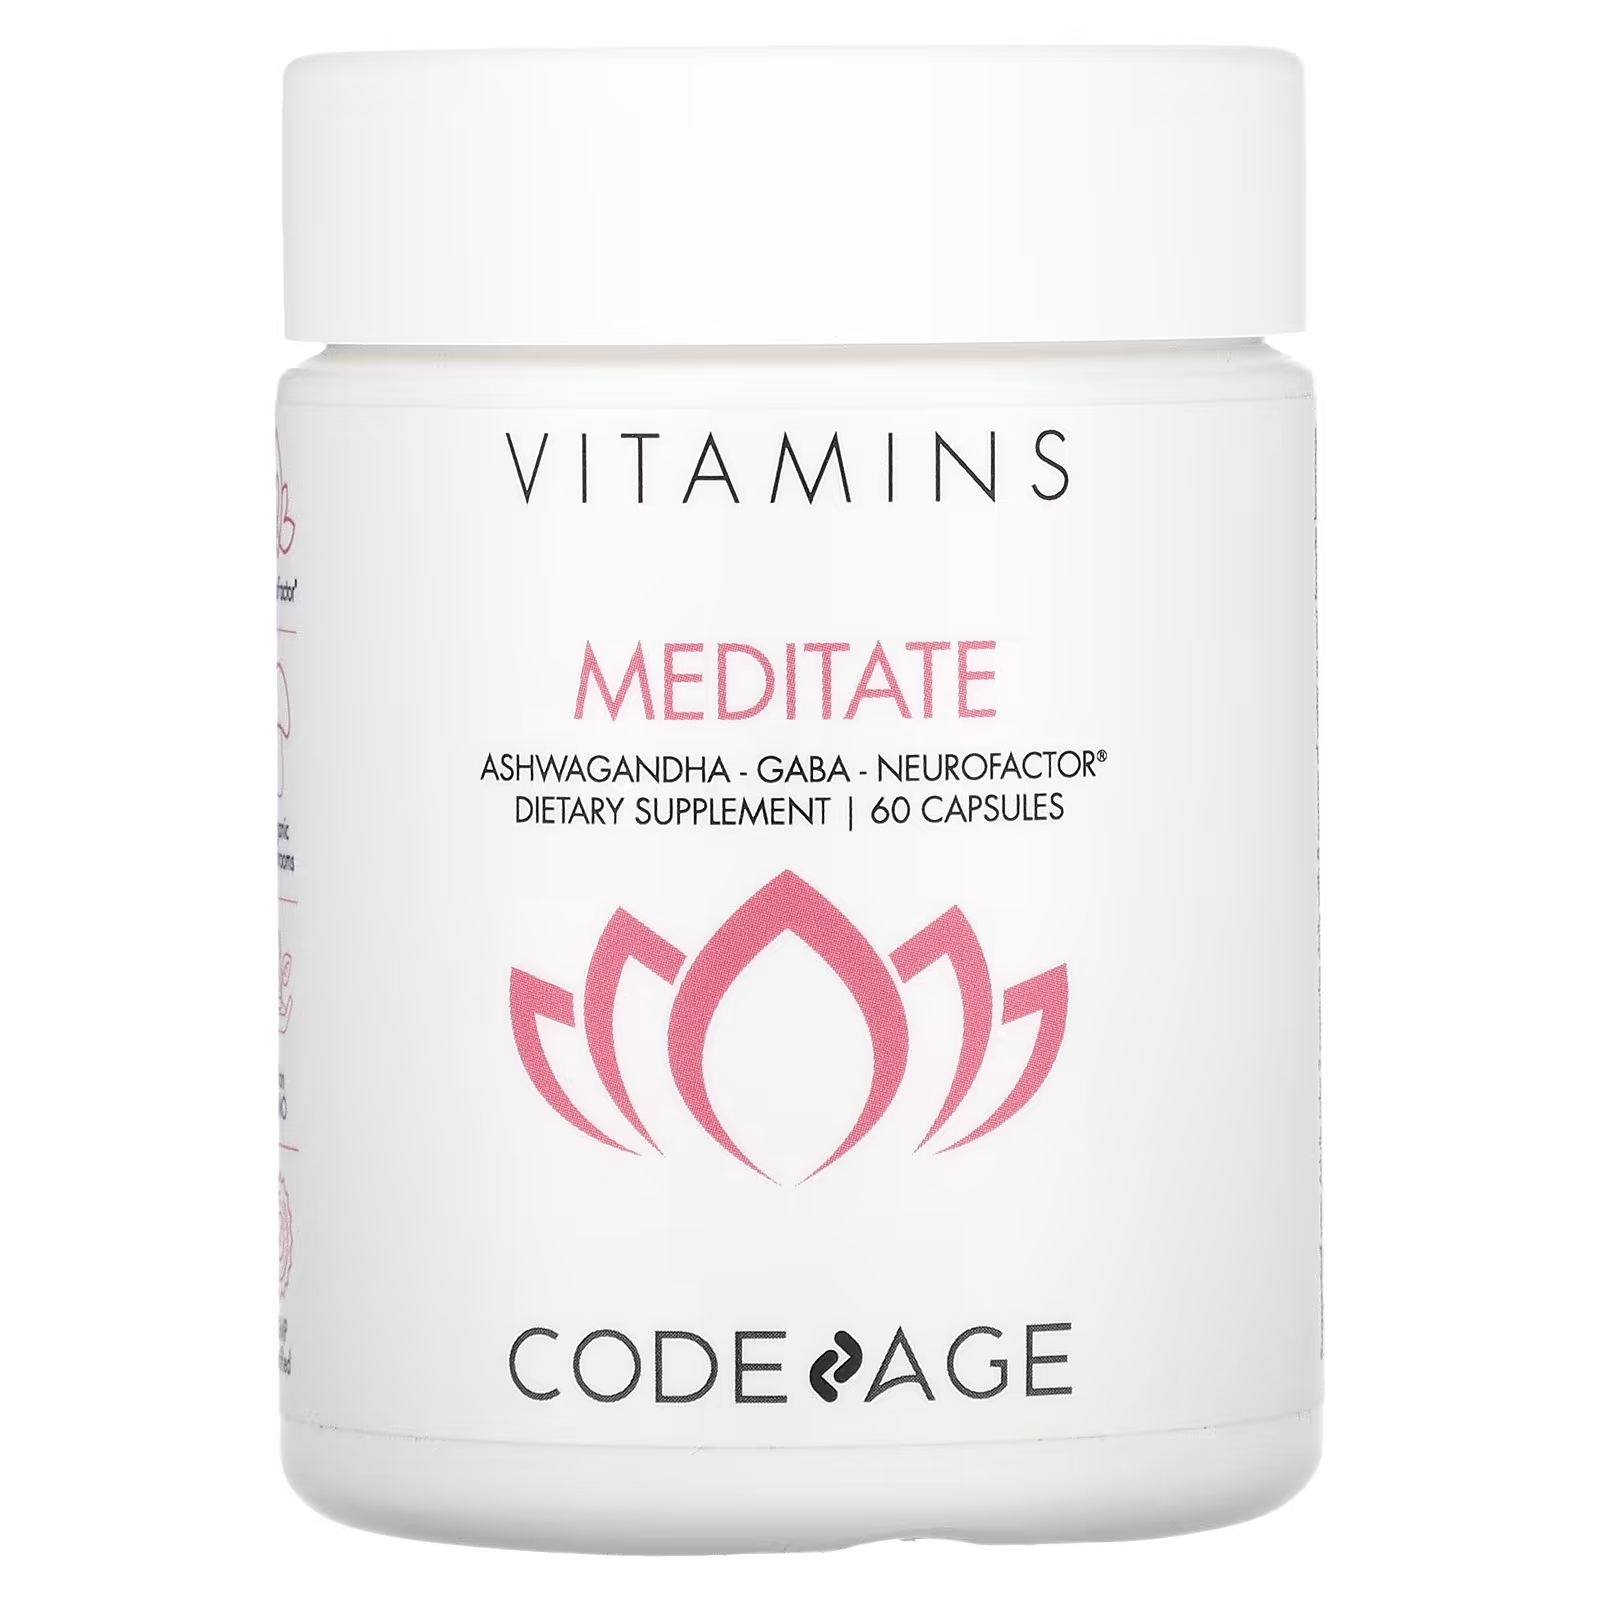 Codeage Vitamins Meditate ашваганда габа нейрофактор, 60 капсул codeage vitamins clearface 90 капсул